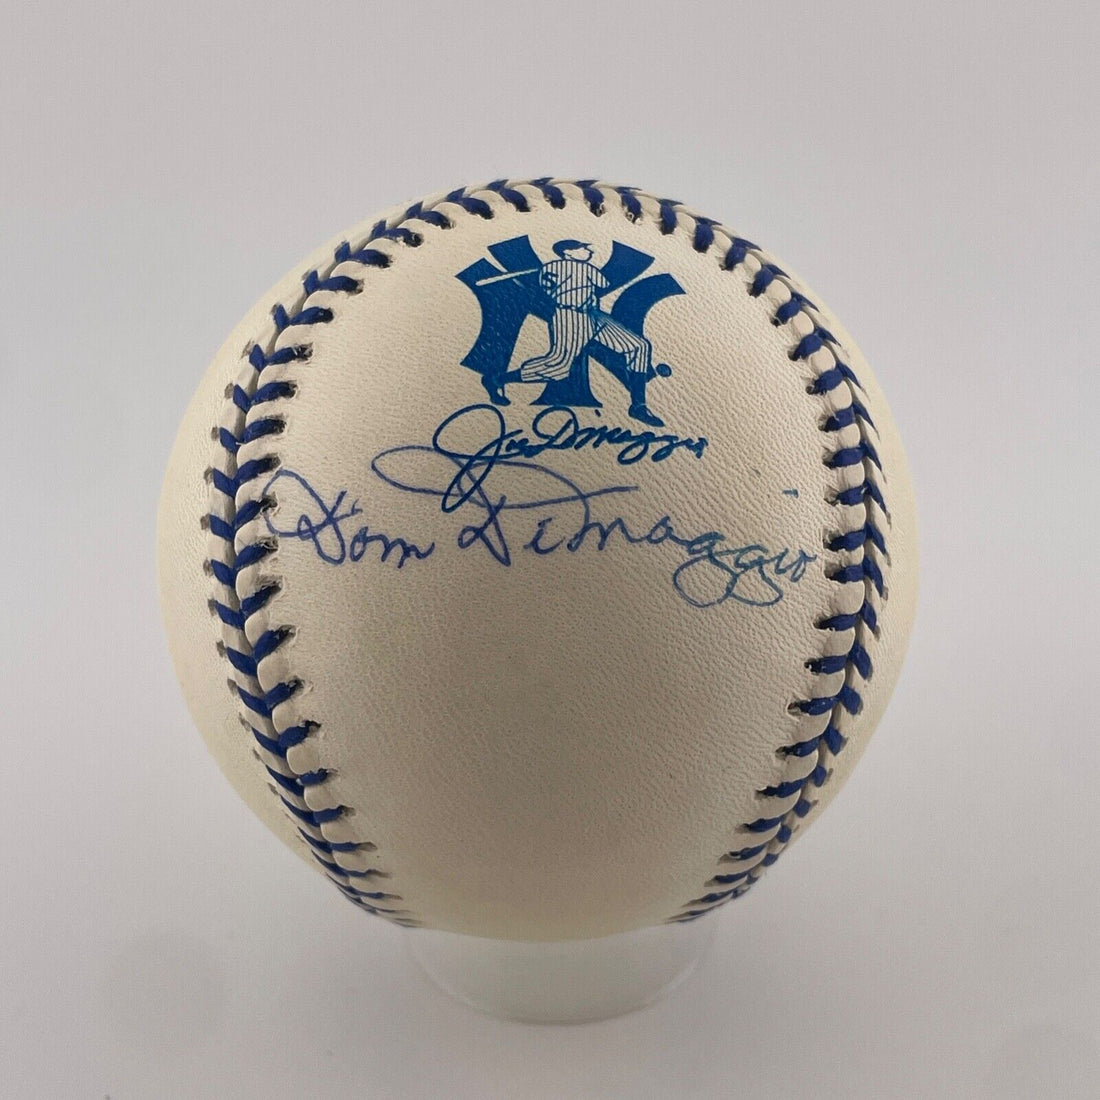 Dom DiMaggio Signed Baseball Joe DiMaggio Ball. MLB Certified + Steiner Hologram